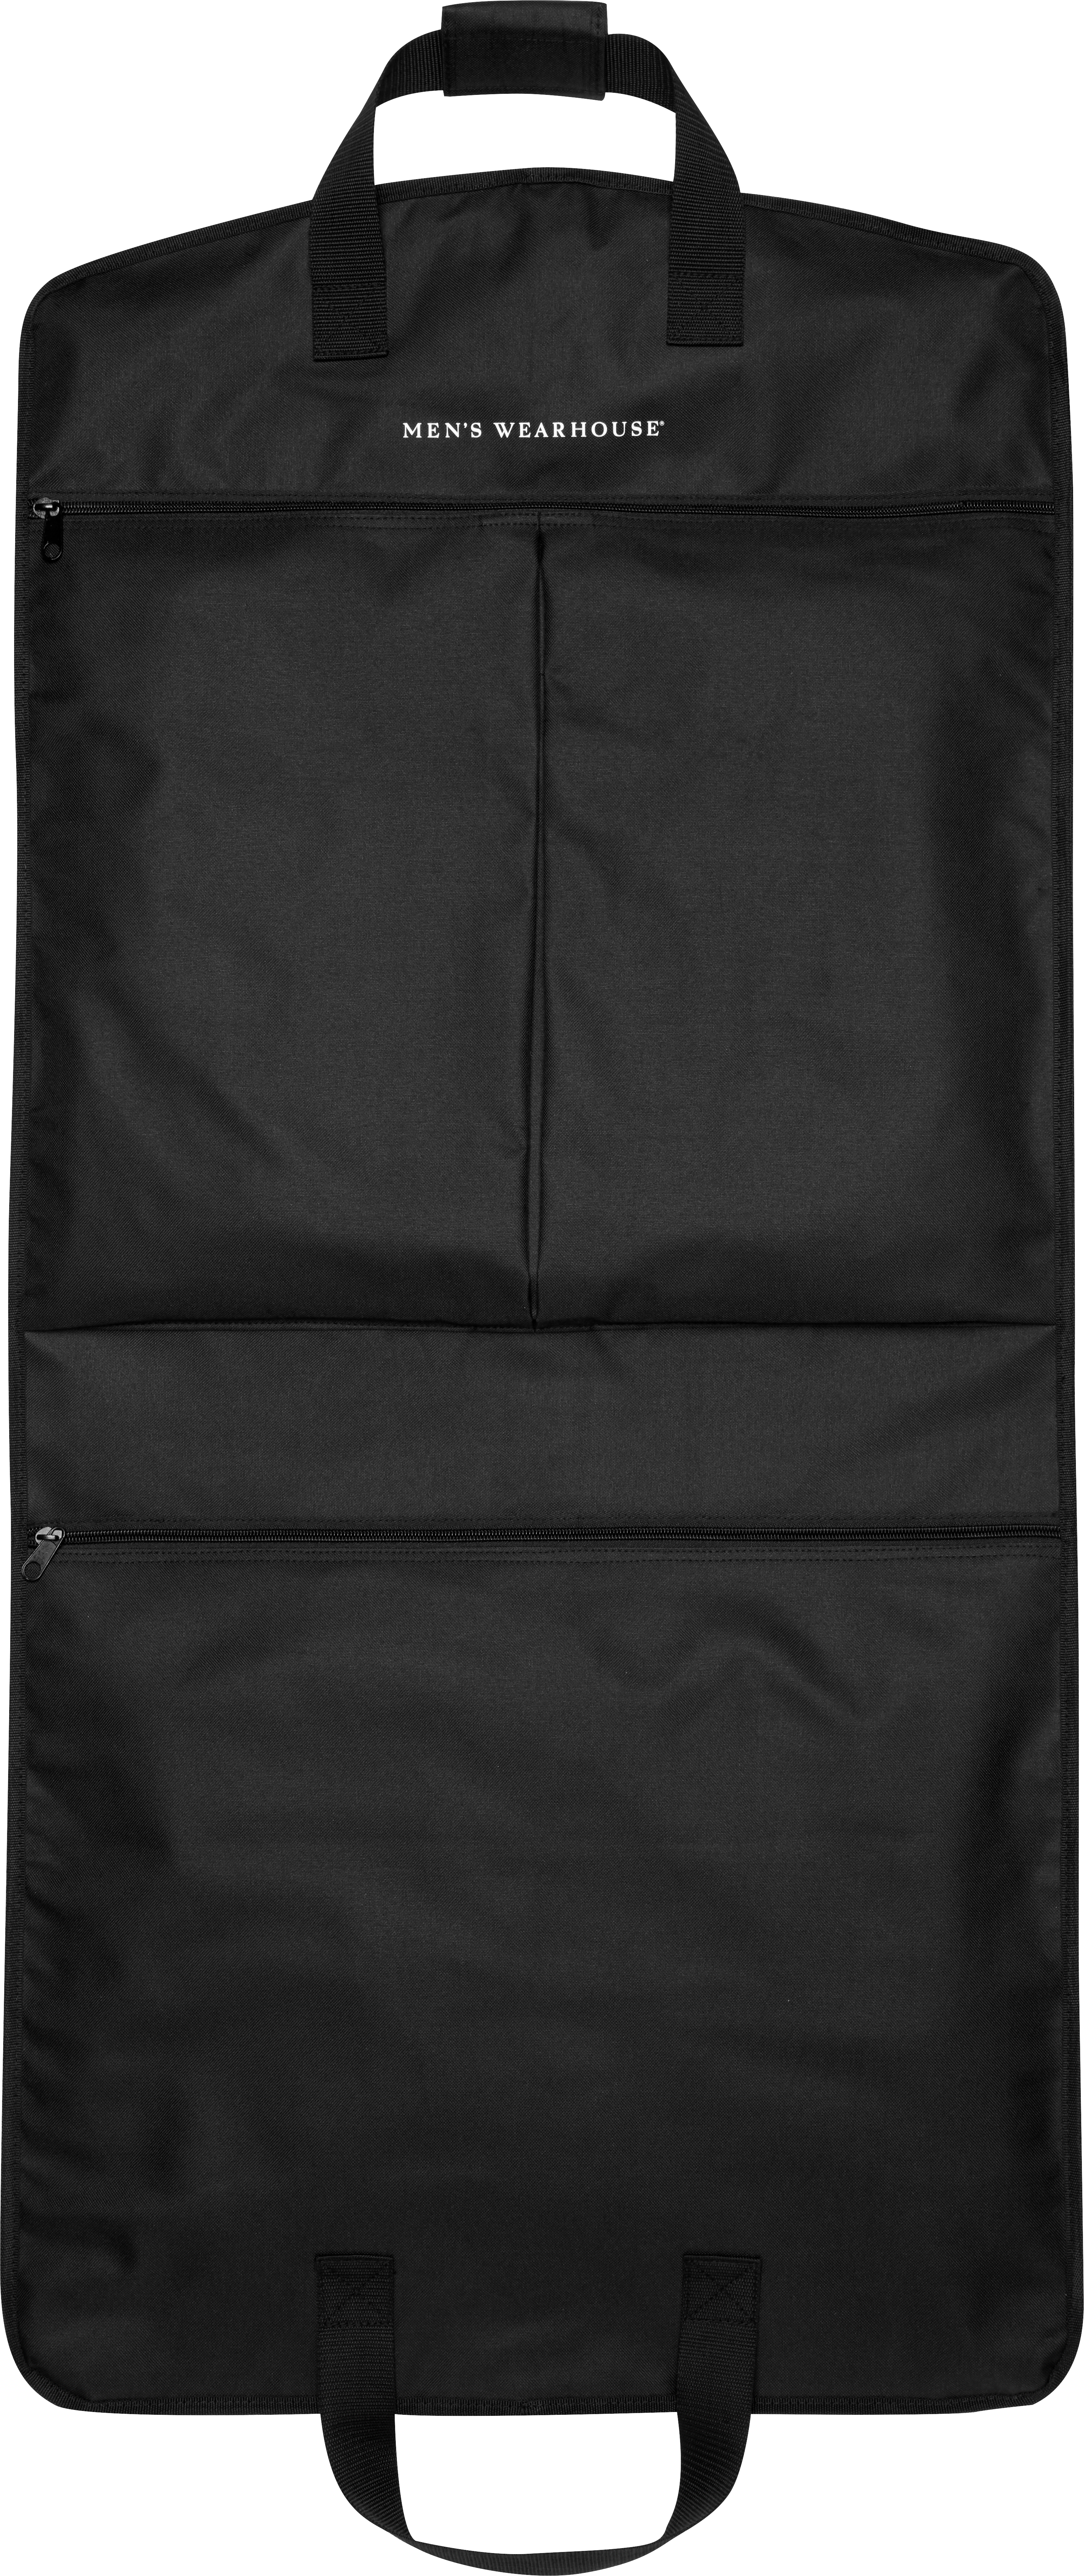 seyfocnia Rolling Garment Bags,Garment Bag with Wheels Travel Garment Bag  with Shoe Compartment Rolling Duffle Bag with Wheels